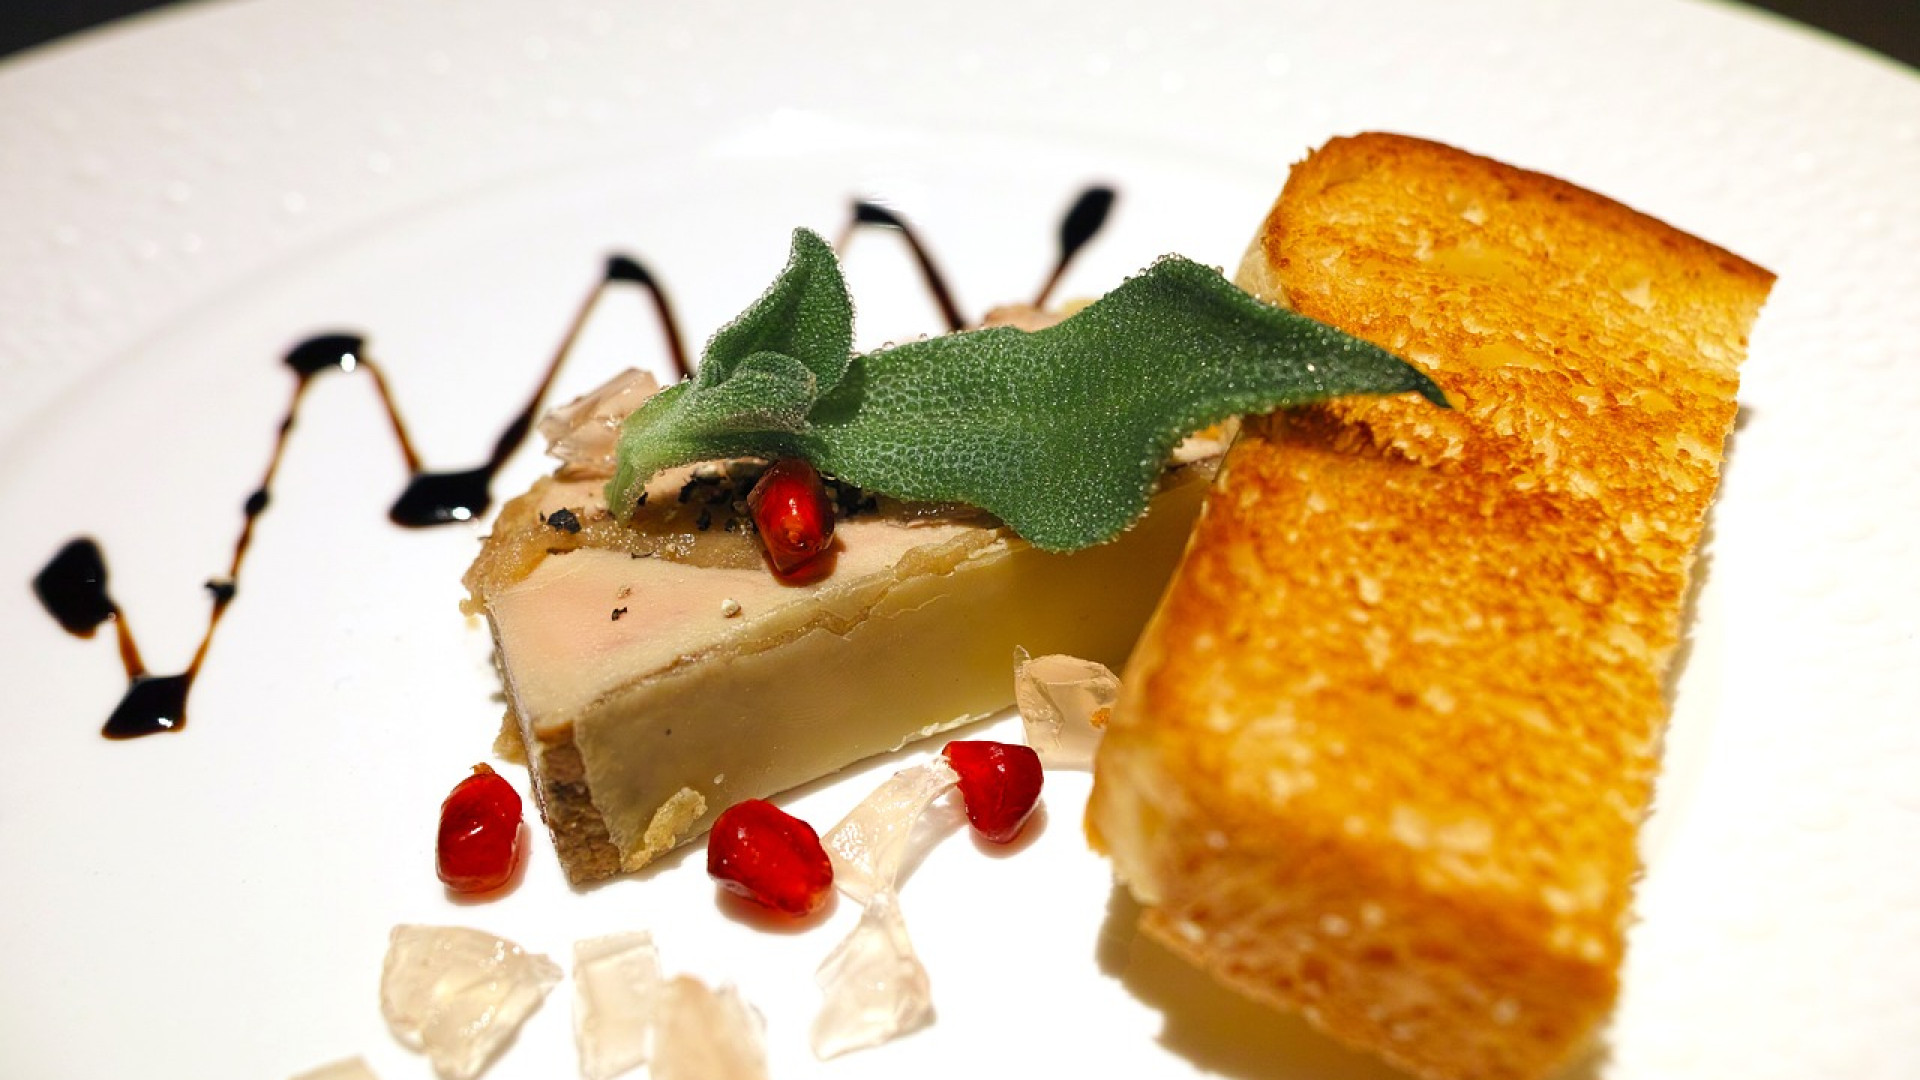 Où acheter du foie gras de canard ?